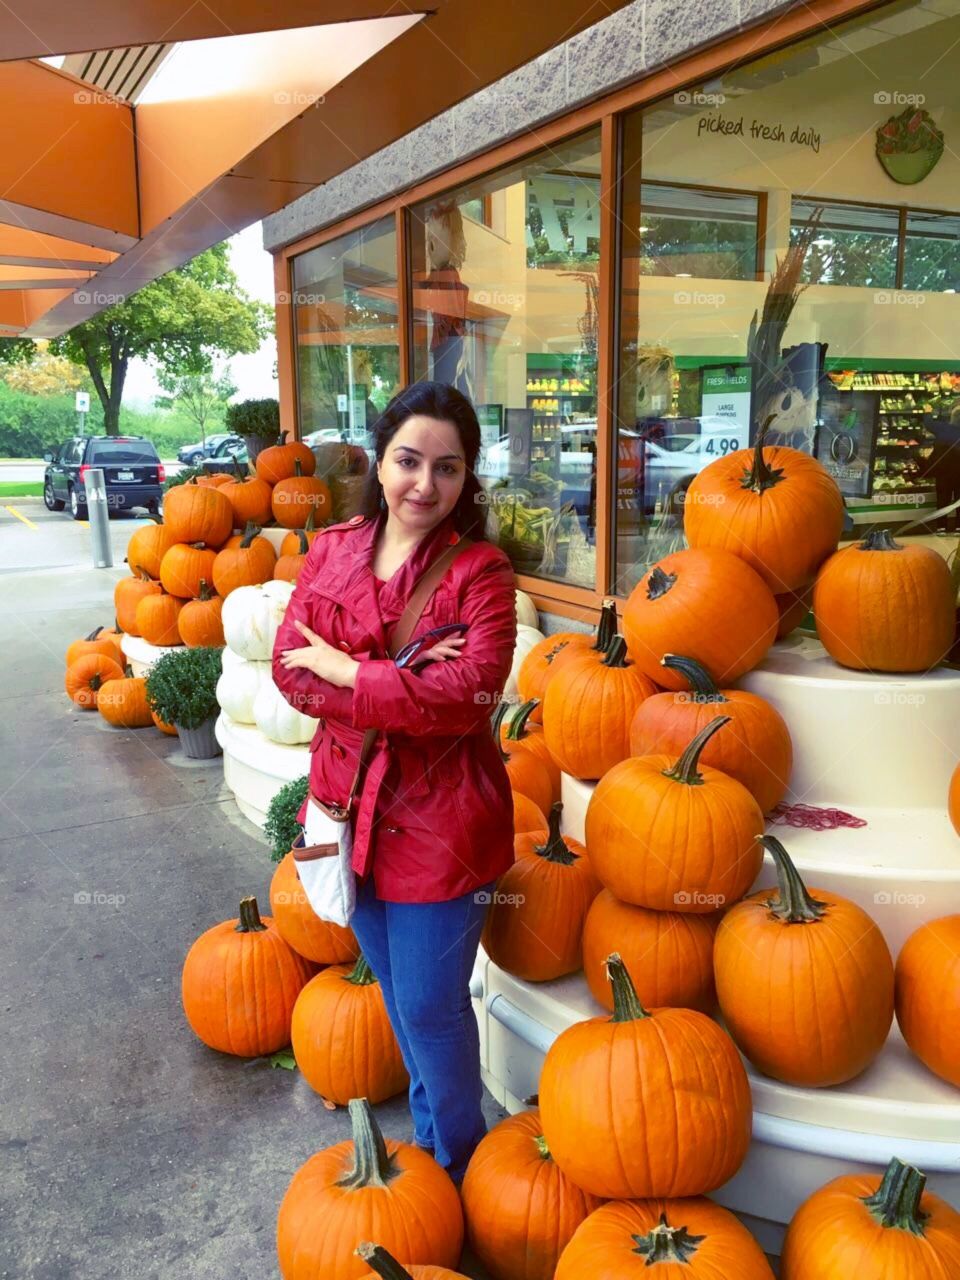 Me and pumpkins 